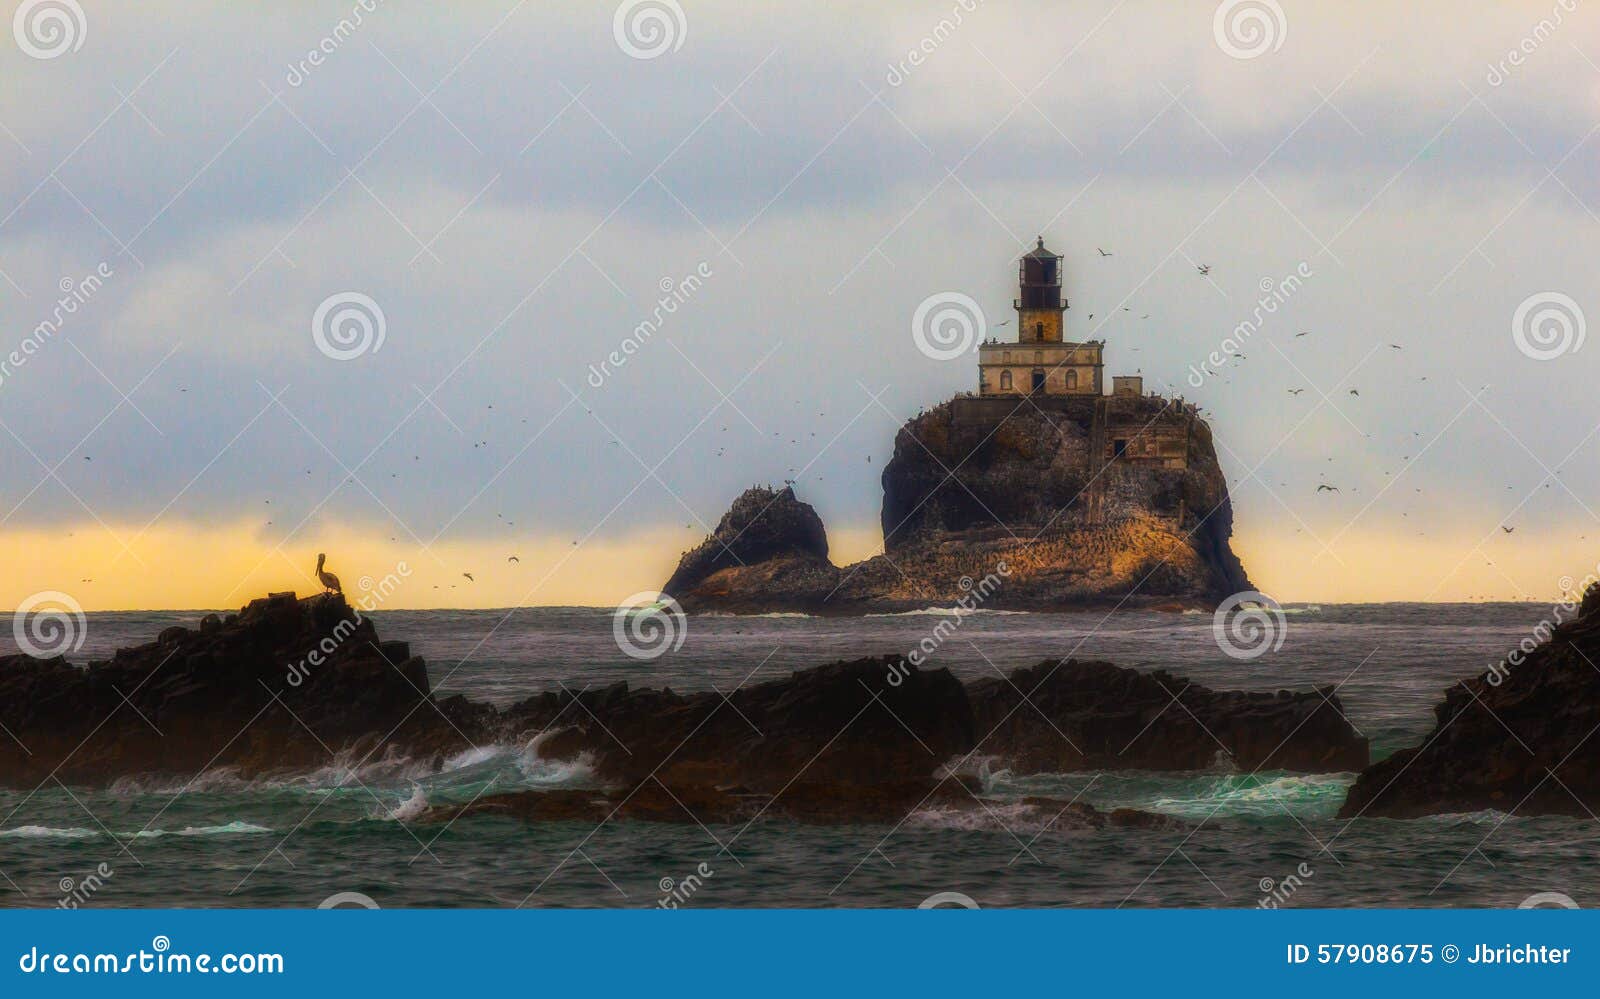 tillamook lighthouse, oregon coast